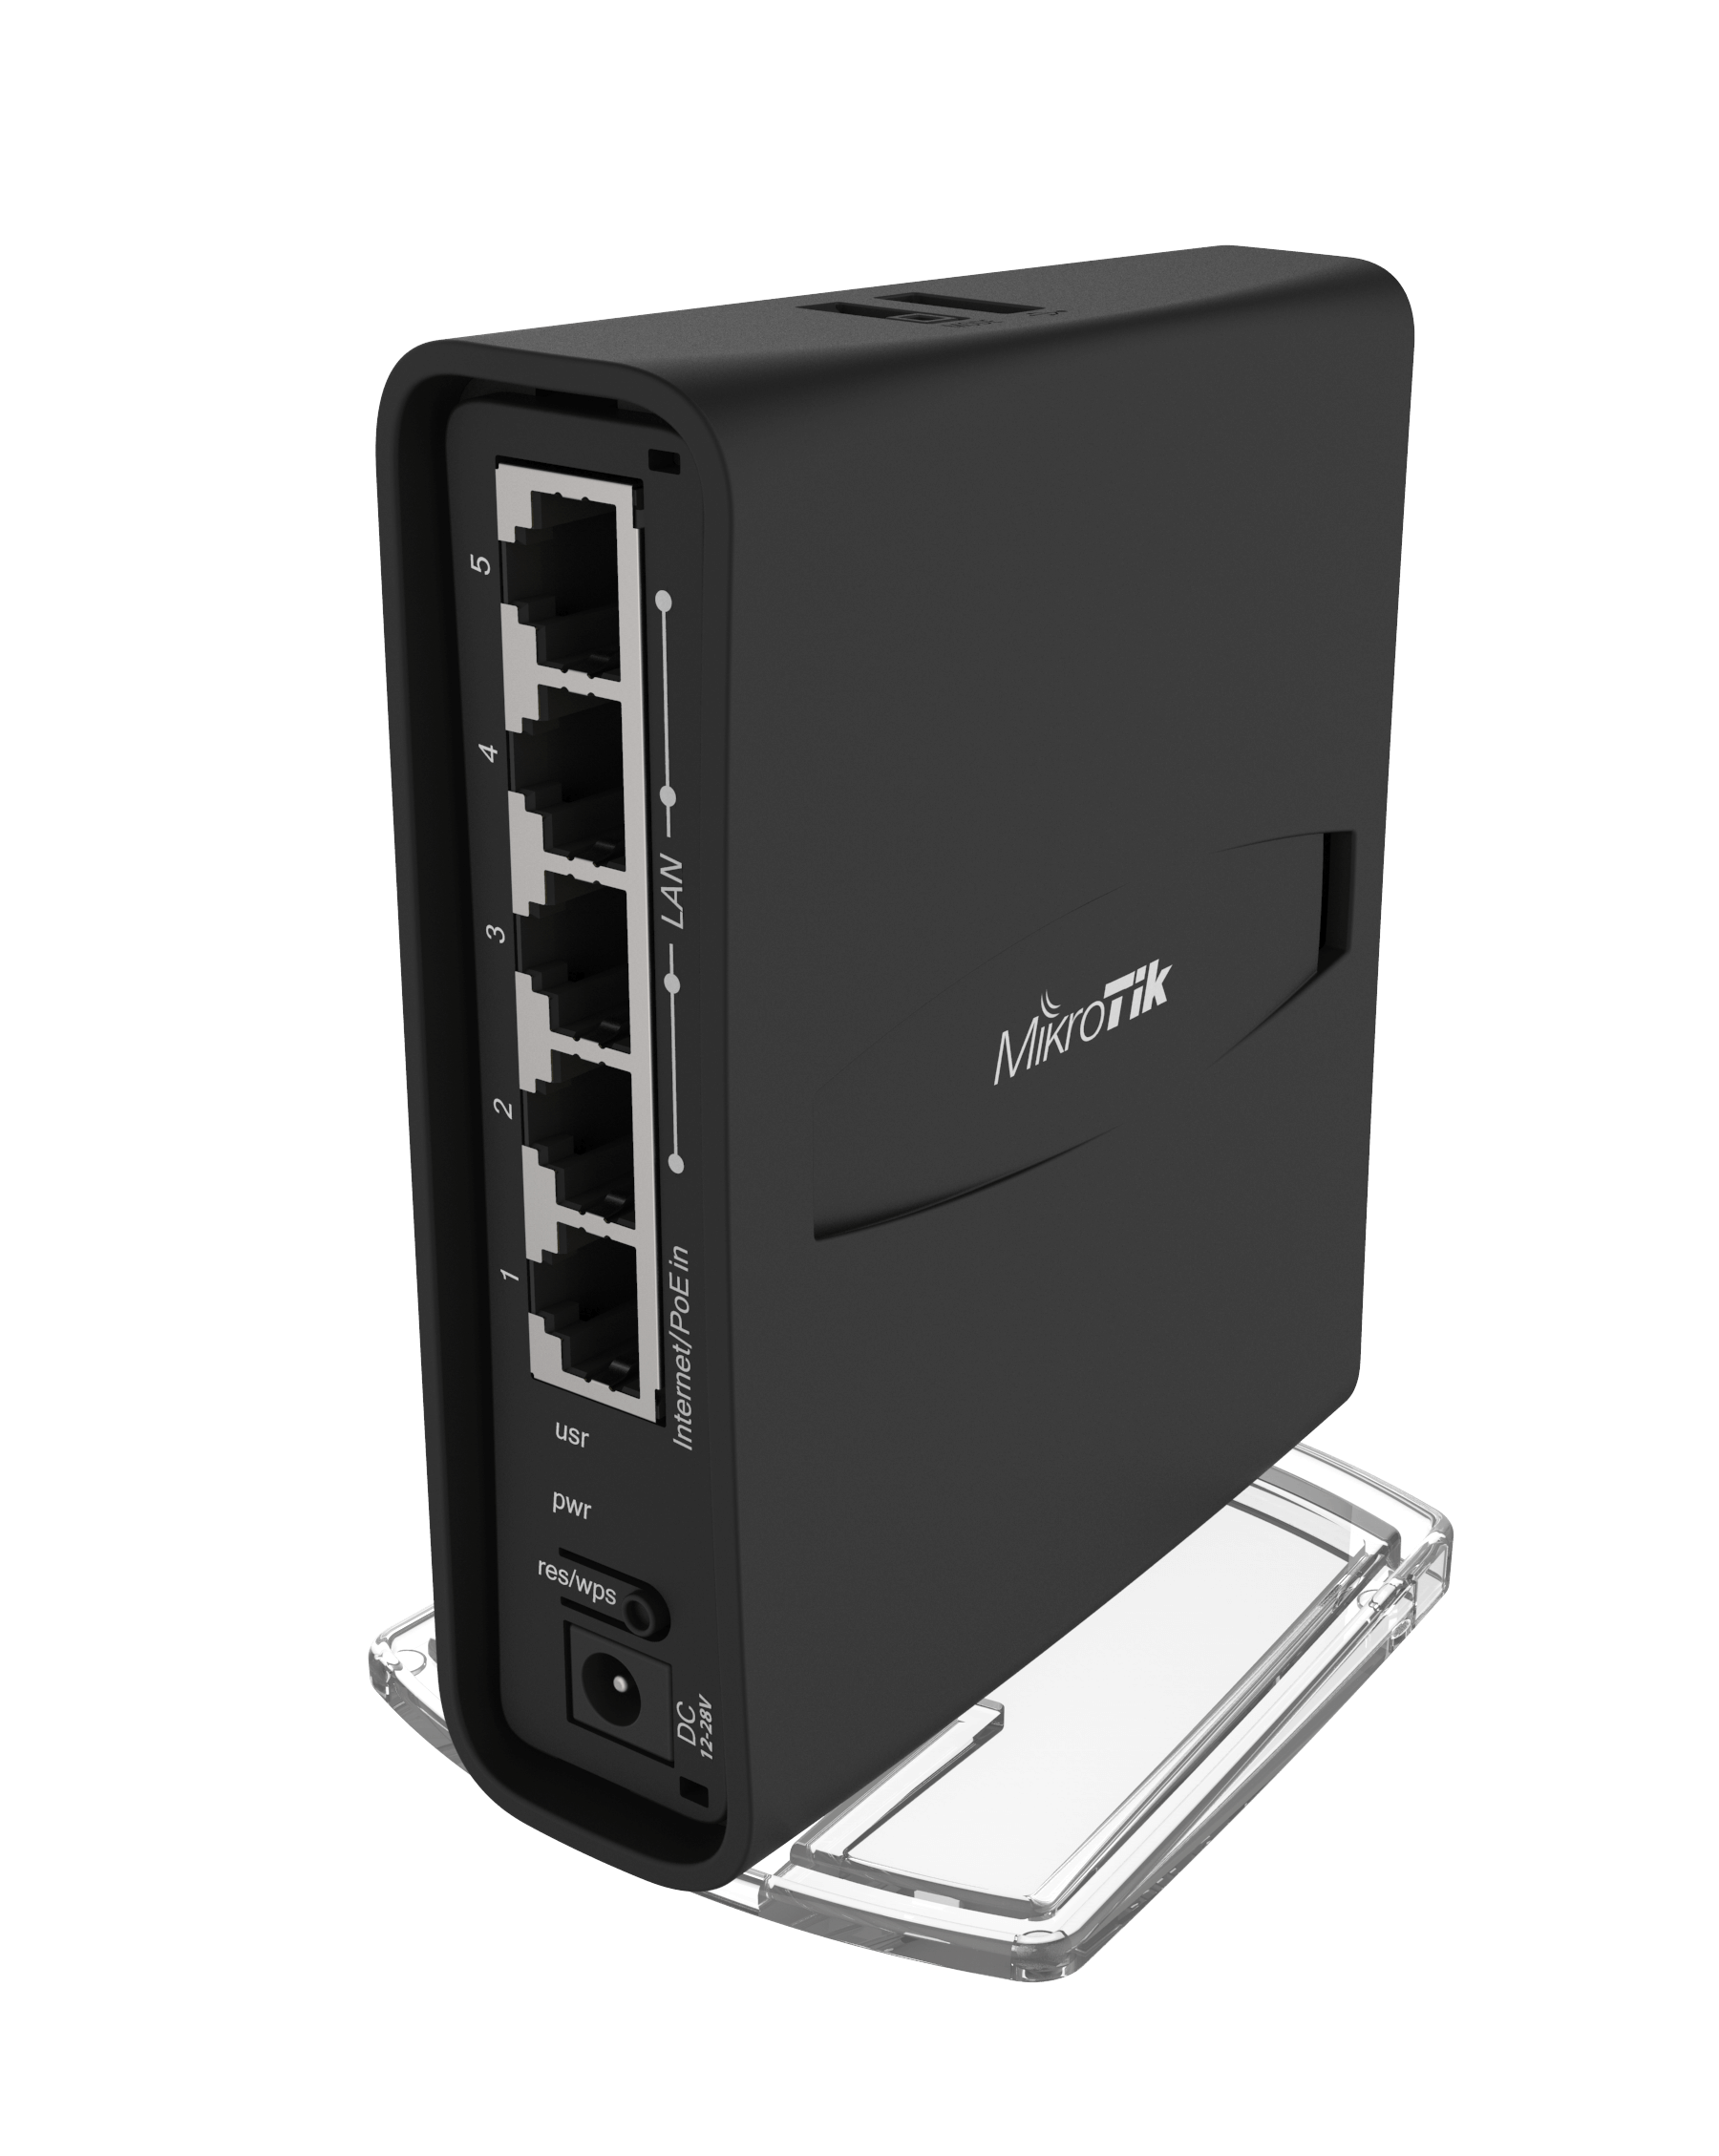 MikroTik hAP ac2 tower - 2.4 / 5GHz Desktop Wi-Fi Router - Black